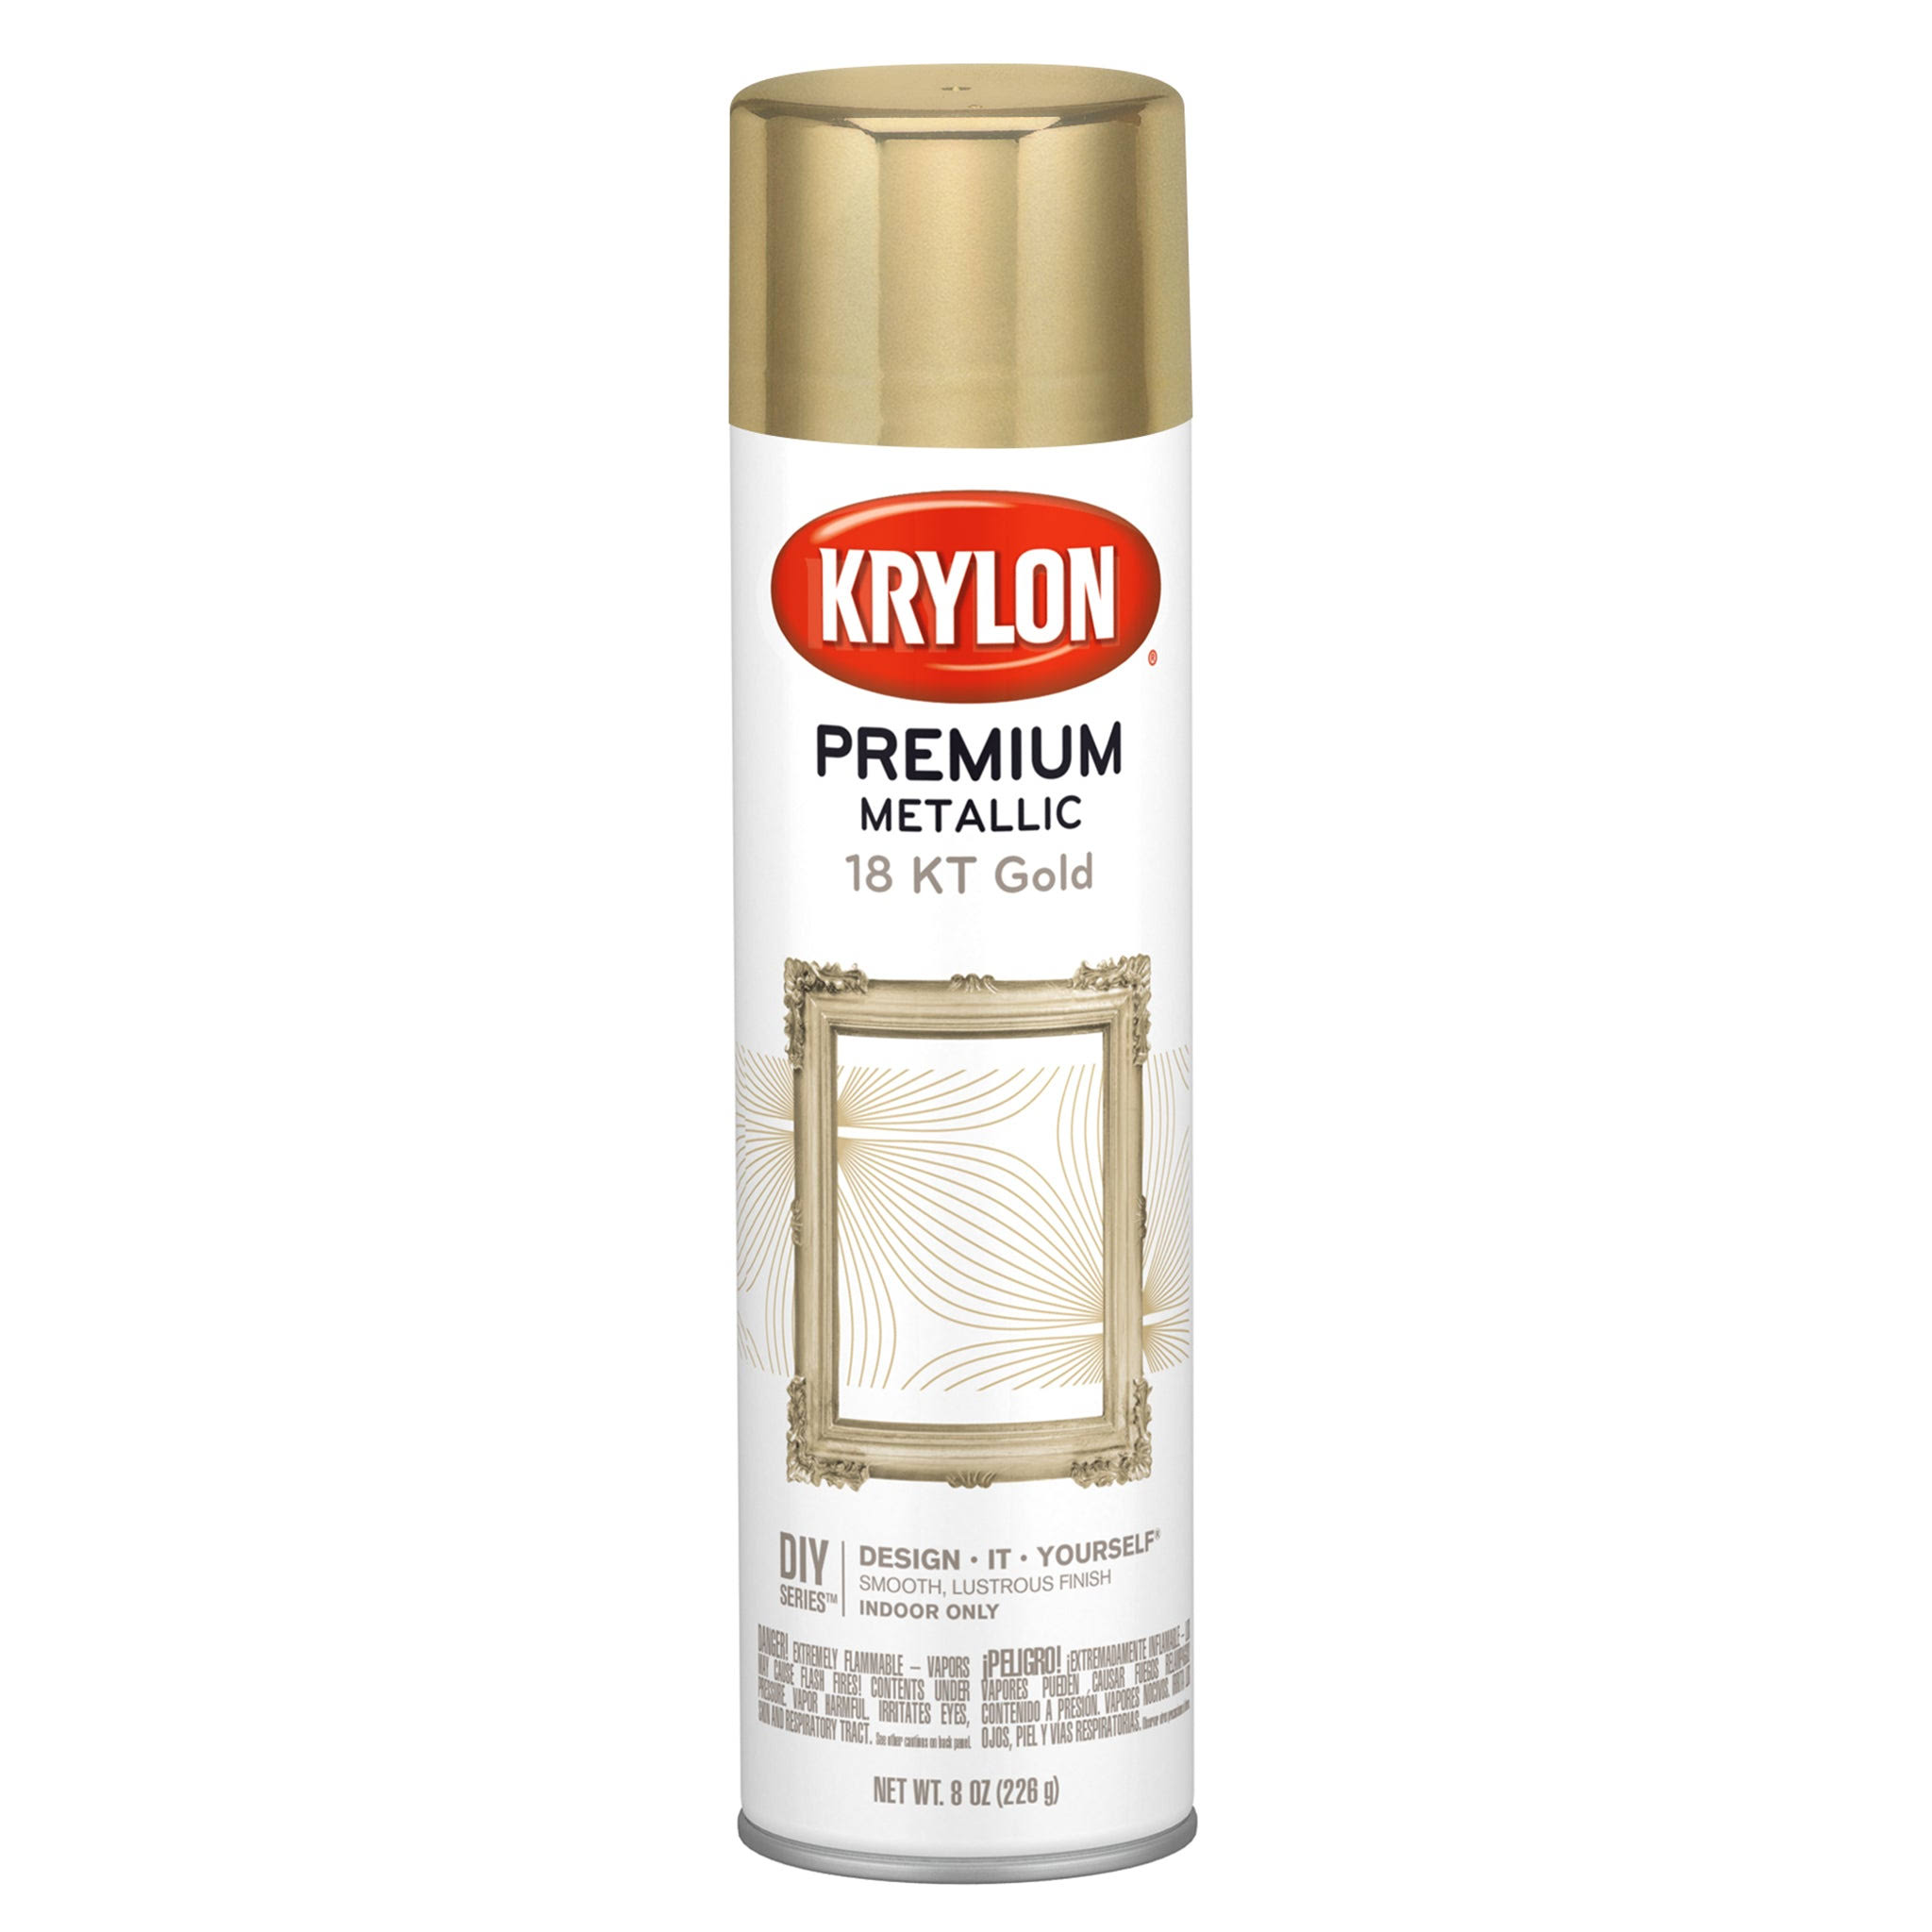 Krylon Metallic Spray Paint - 240ml, Original Chrome